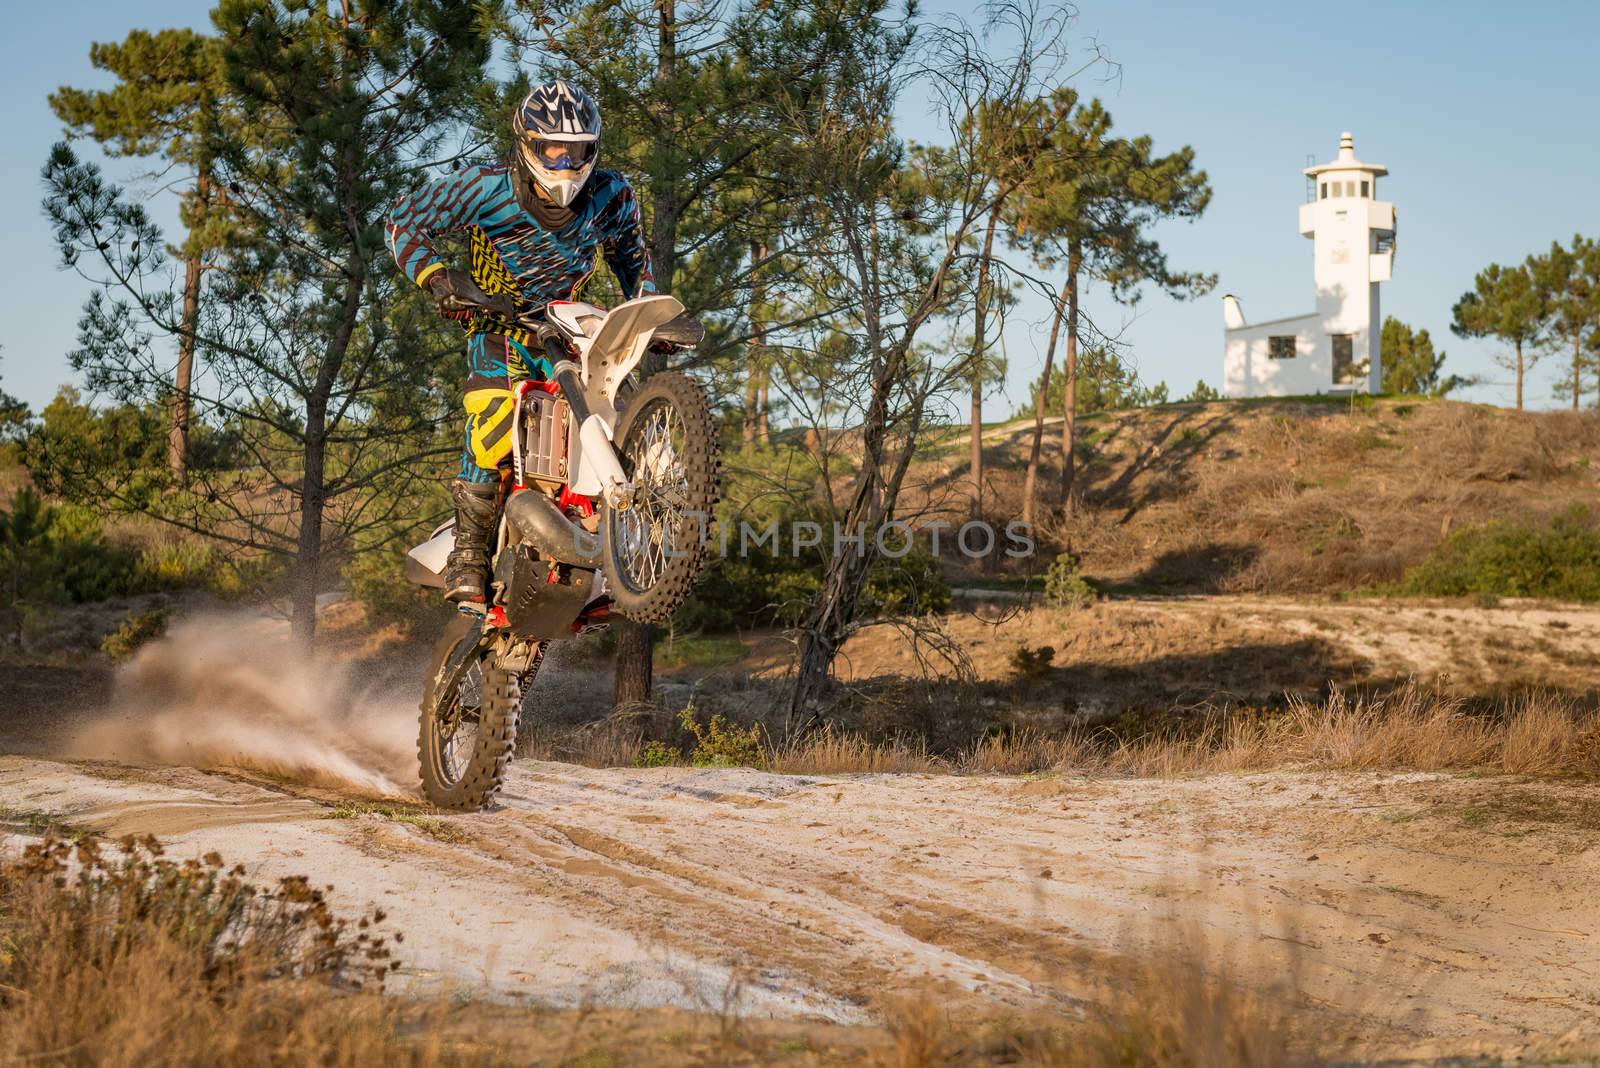 Enduro bike rider on action. Wheelie on sand terrain.